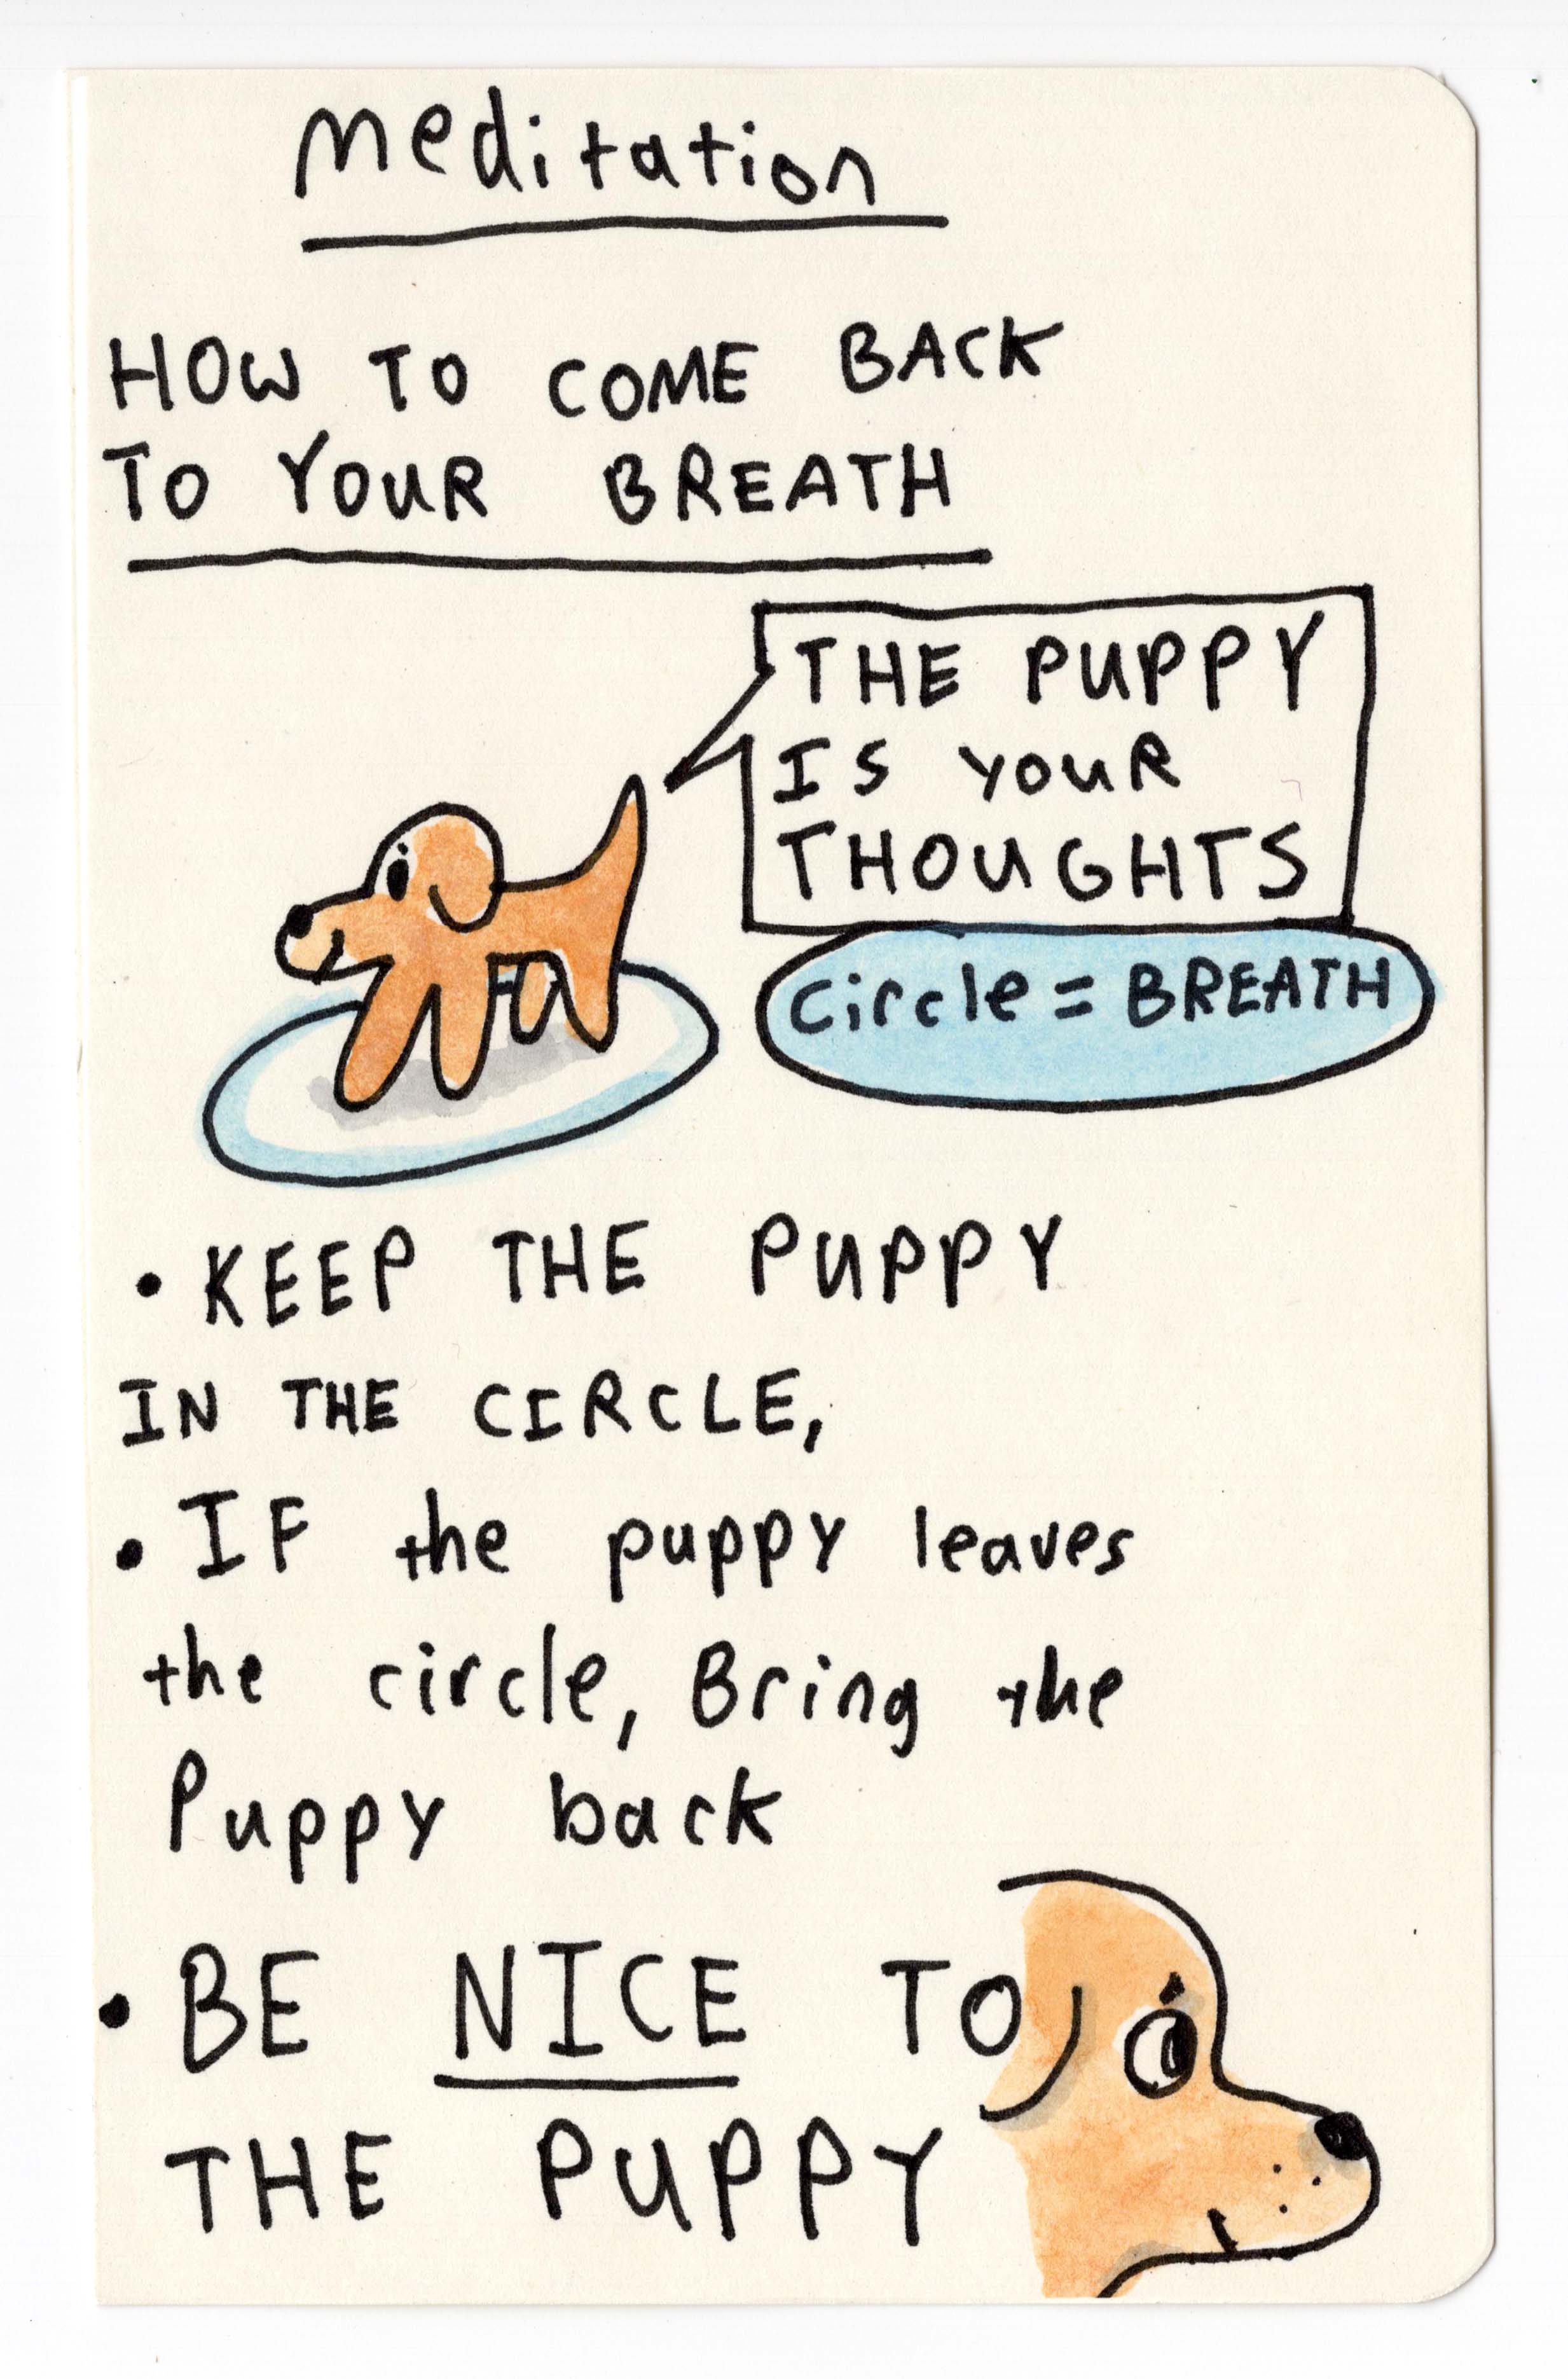 Puppy mediation